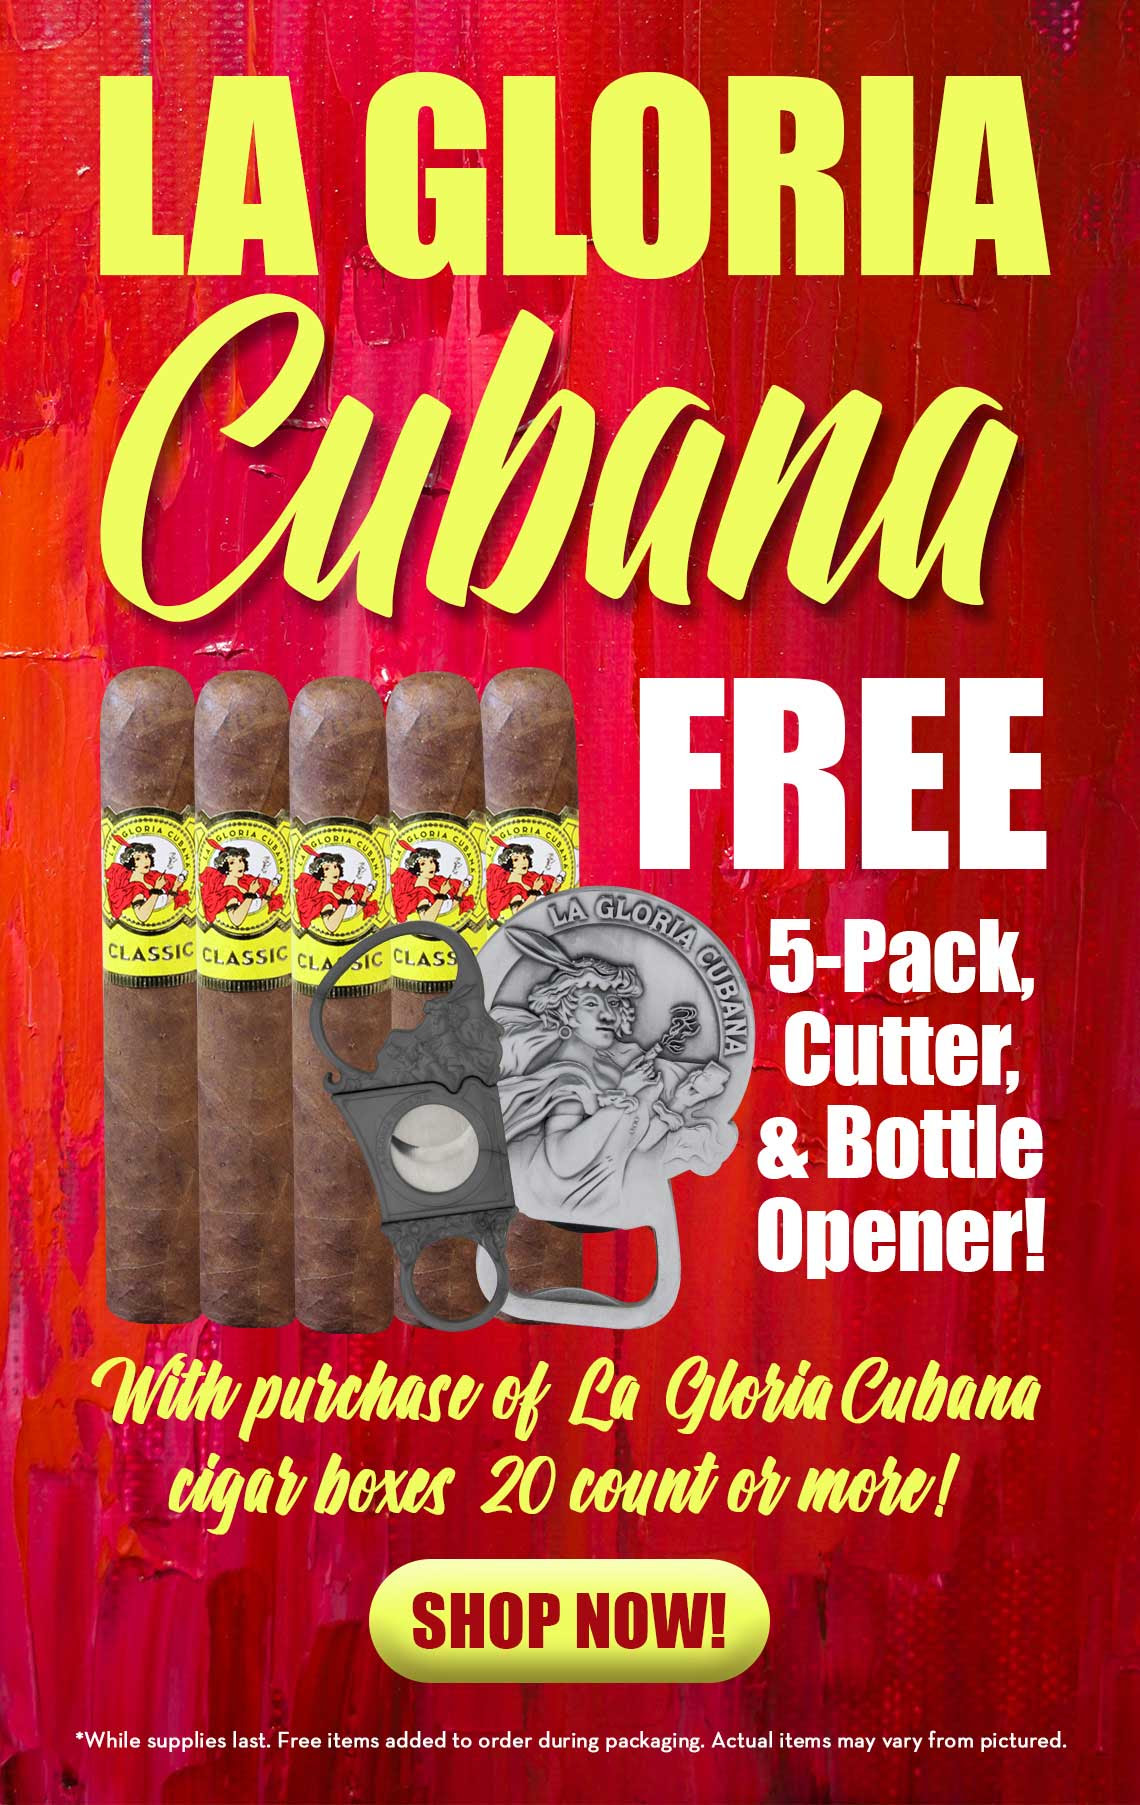 La Gloria Cubana Freebies